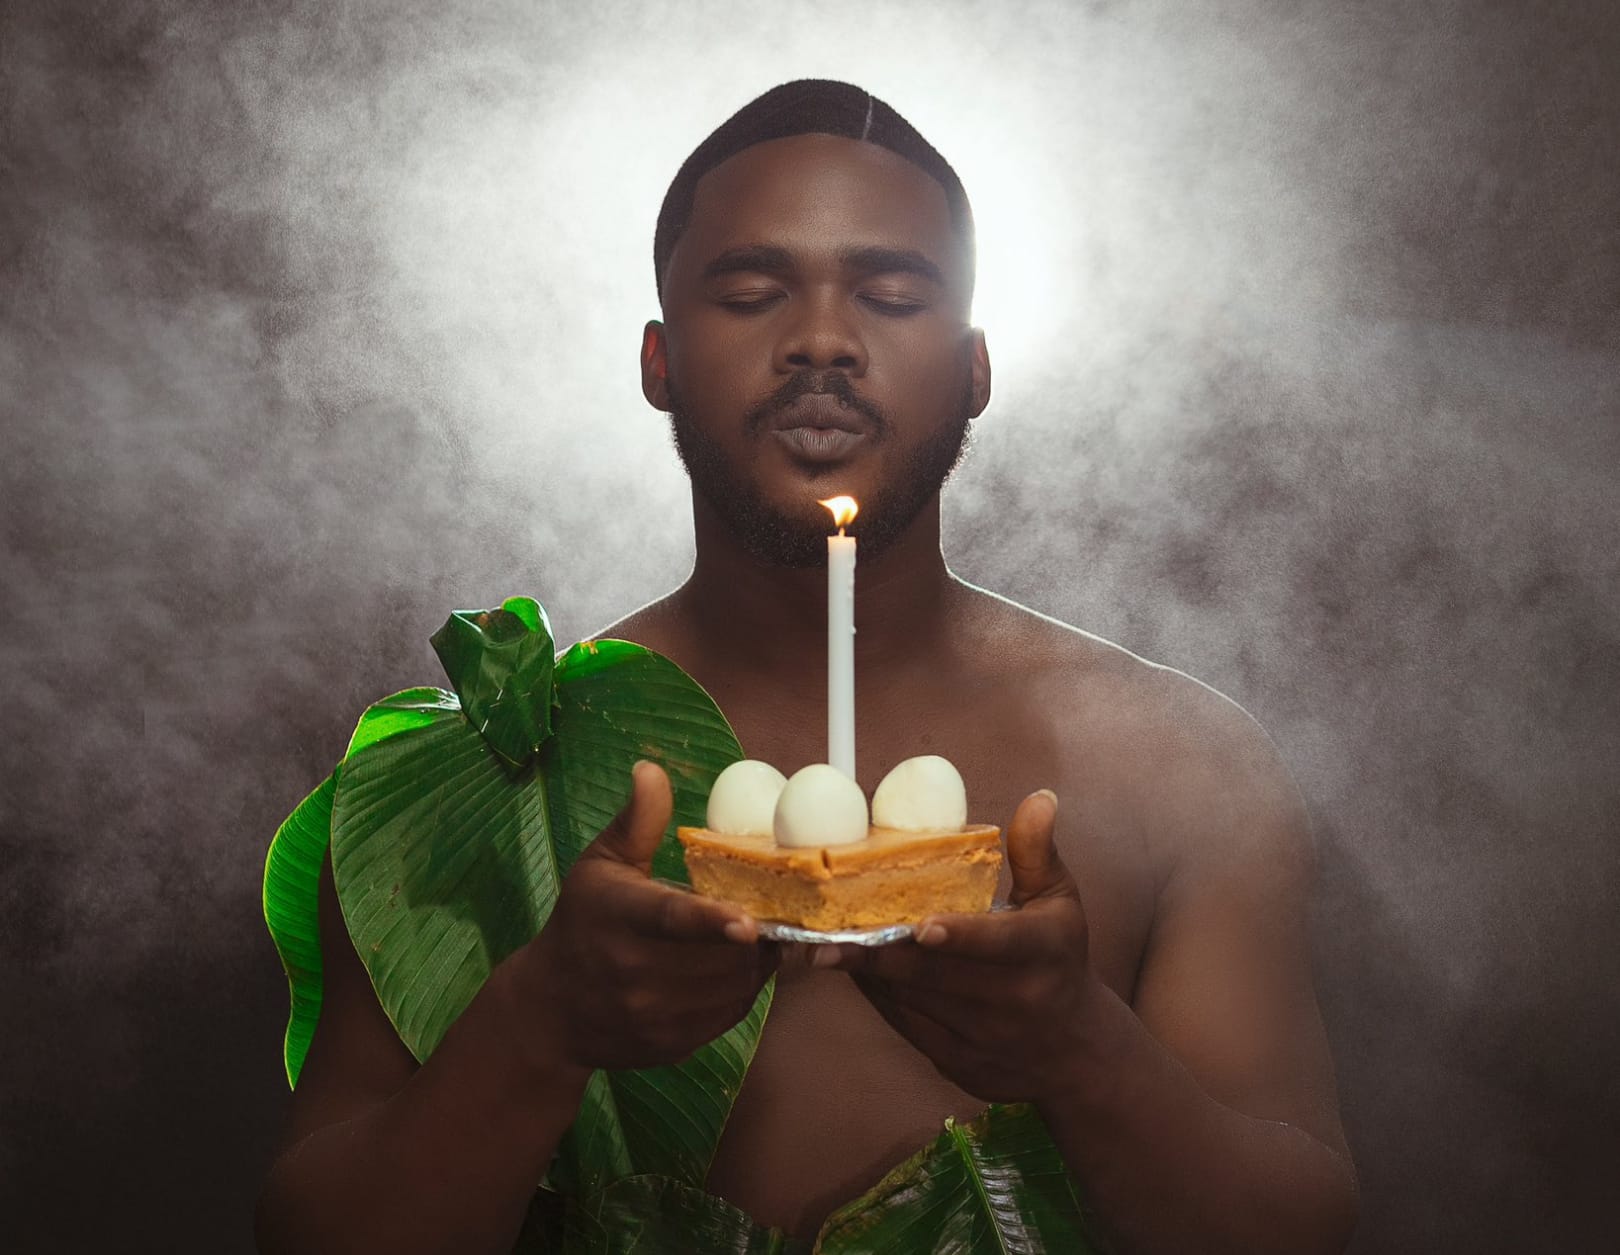 Nigerian moi moi seller stuns internet with leaf outfit, moi moi cake on 25th birthday